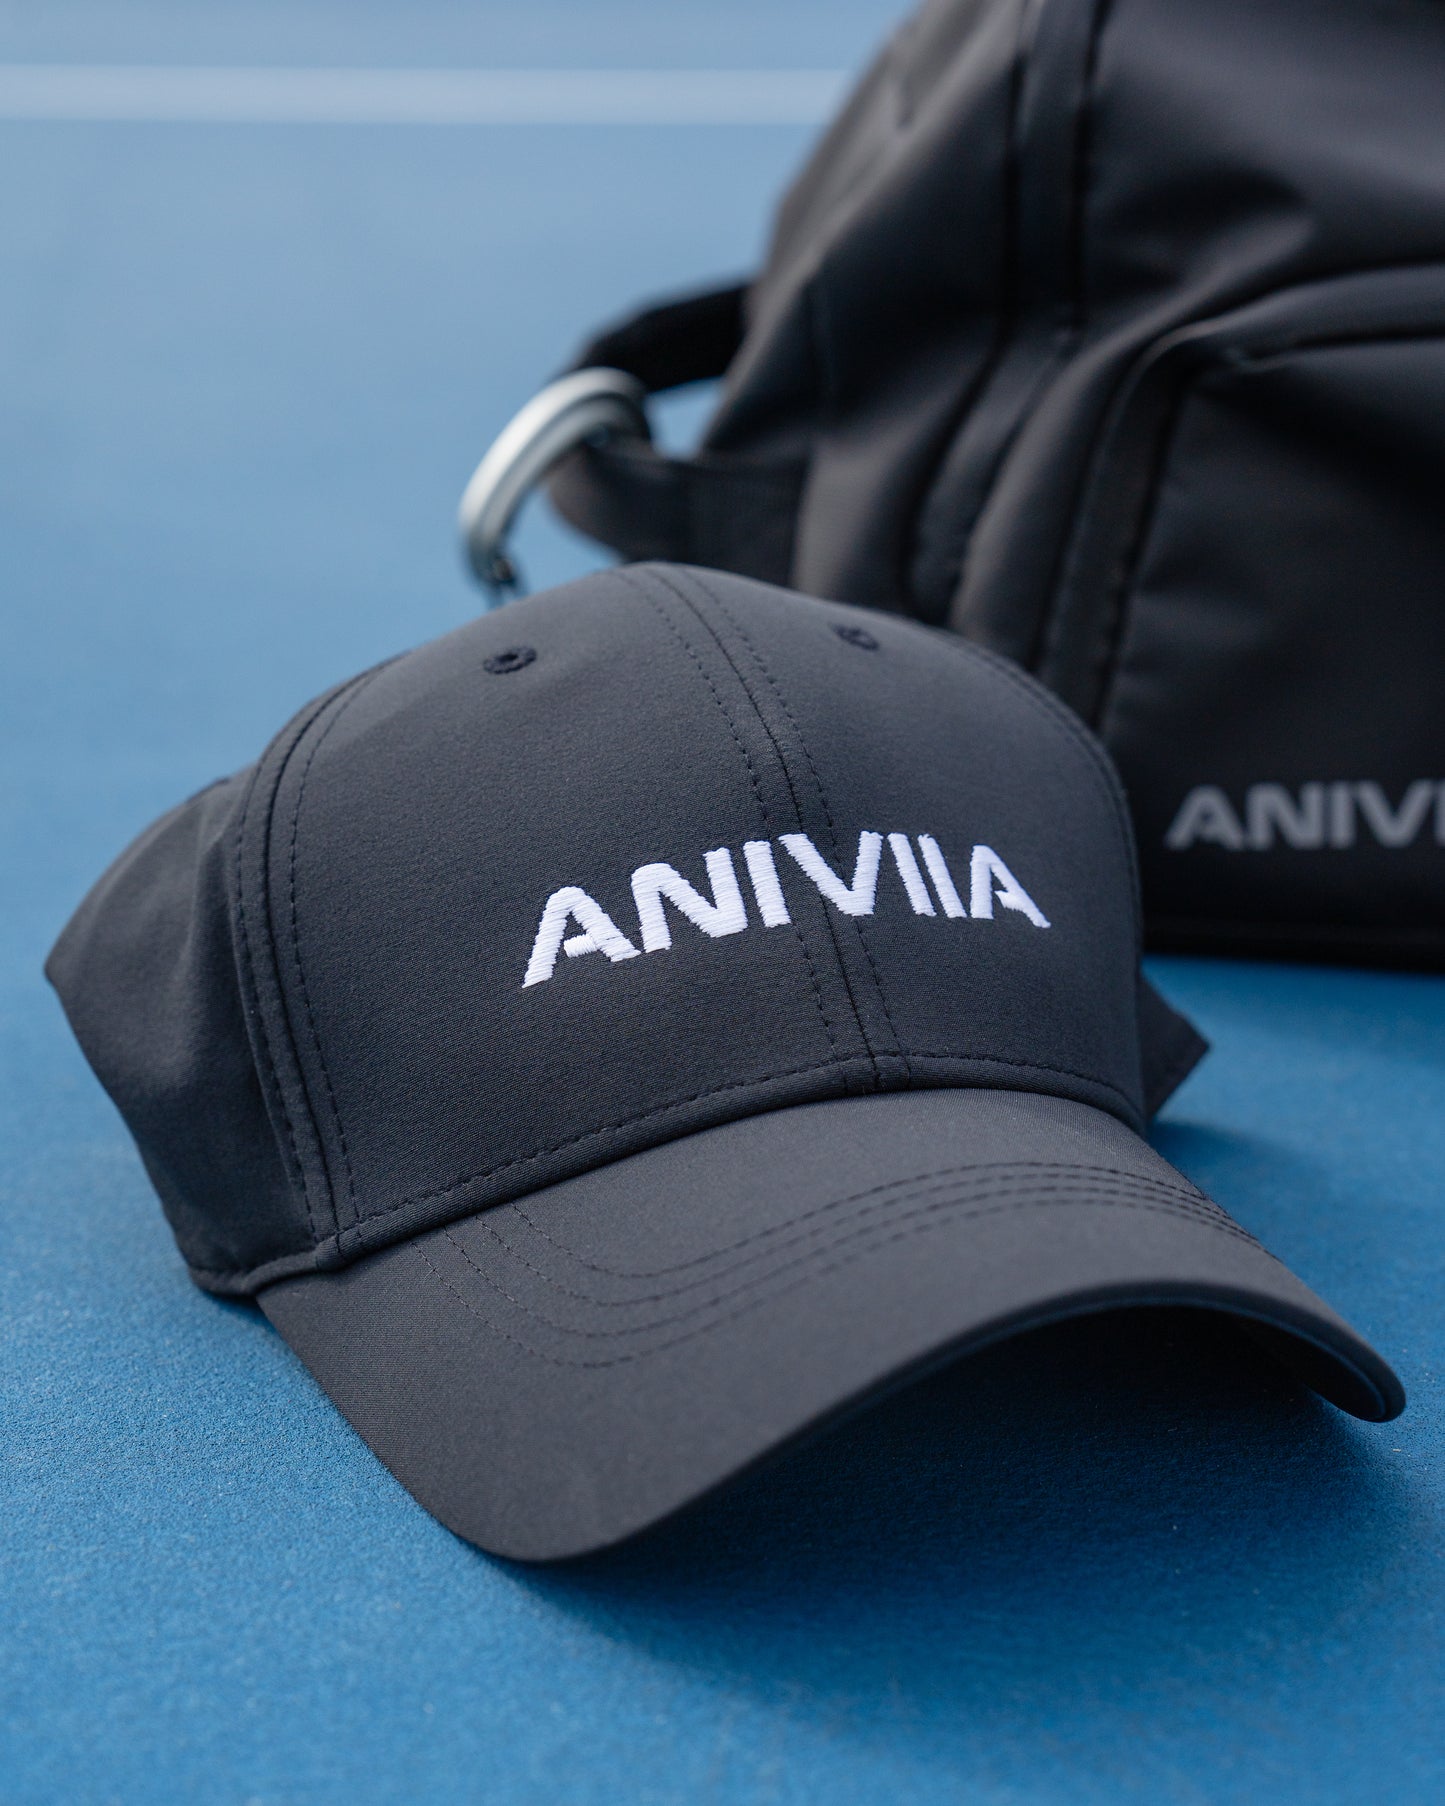 Aniviia x Nike Dry-Fit Hat